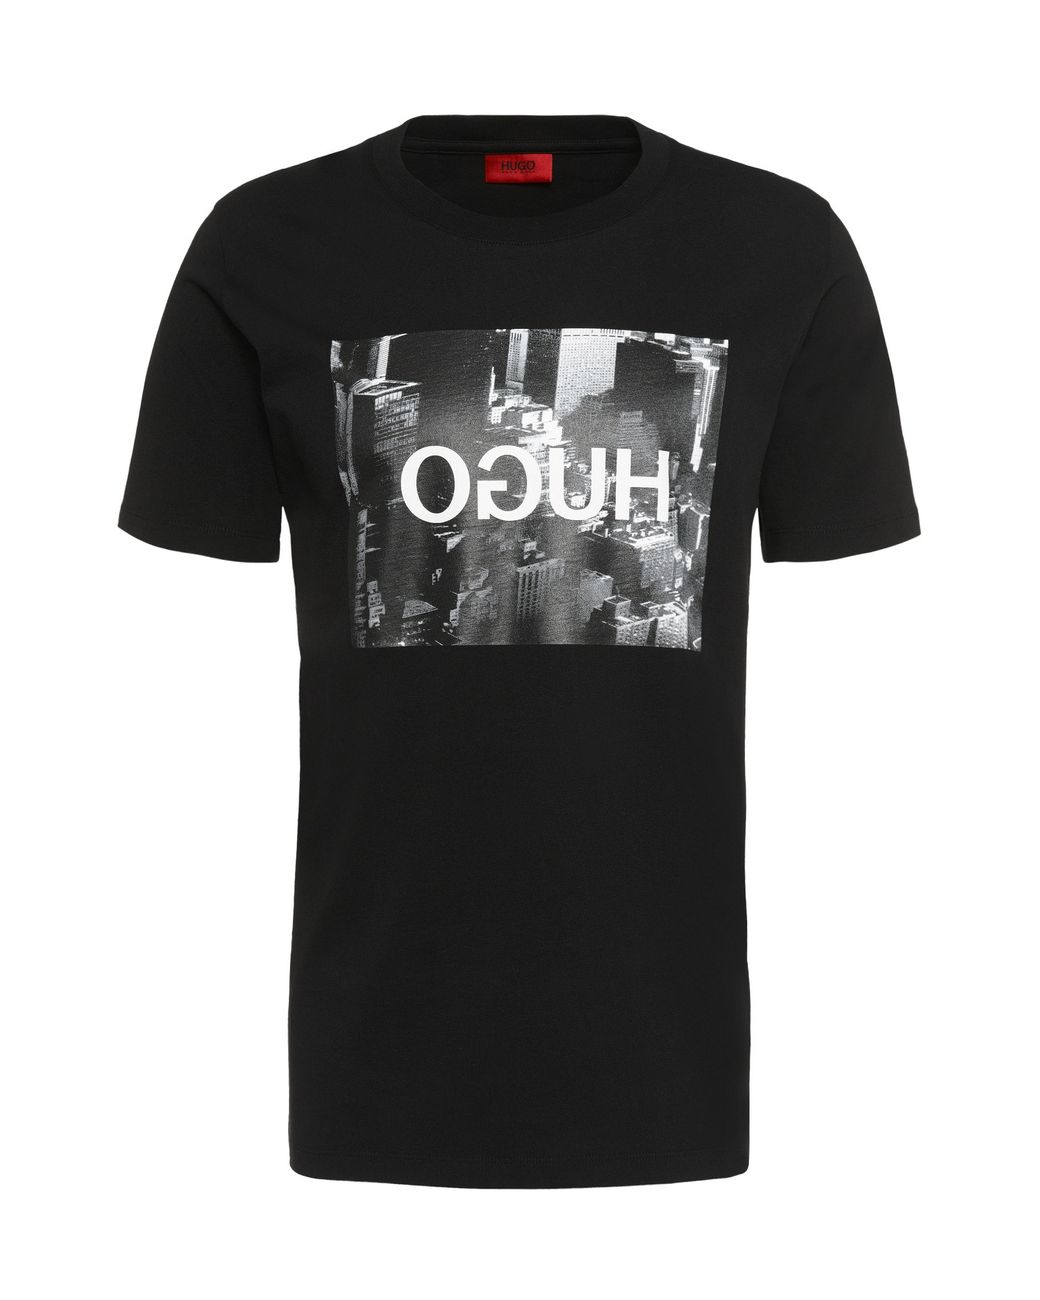 HUGO By Boss T-shirt With Oguh Print In Black for Men | Lyst UK